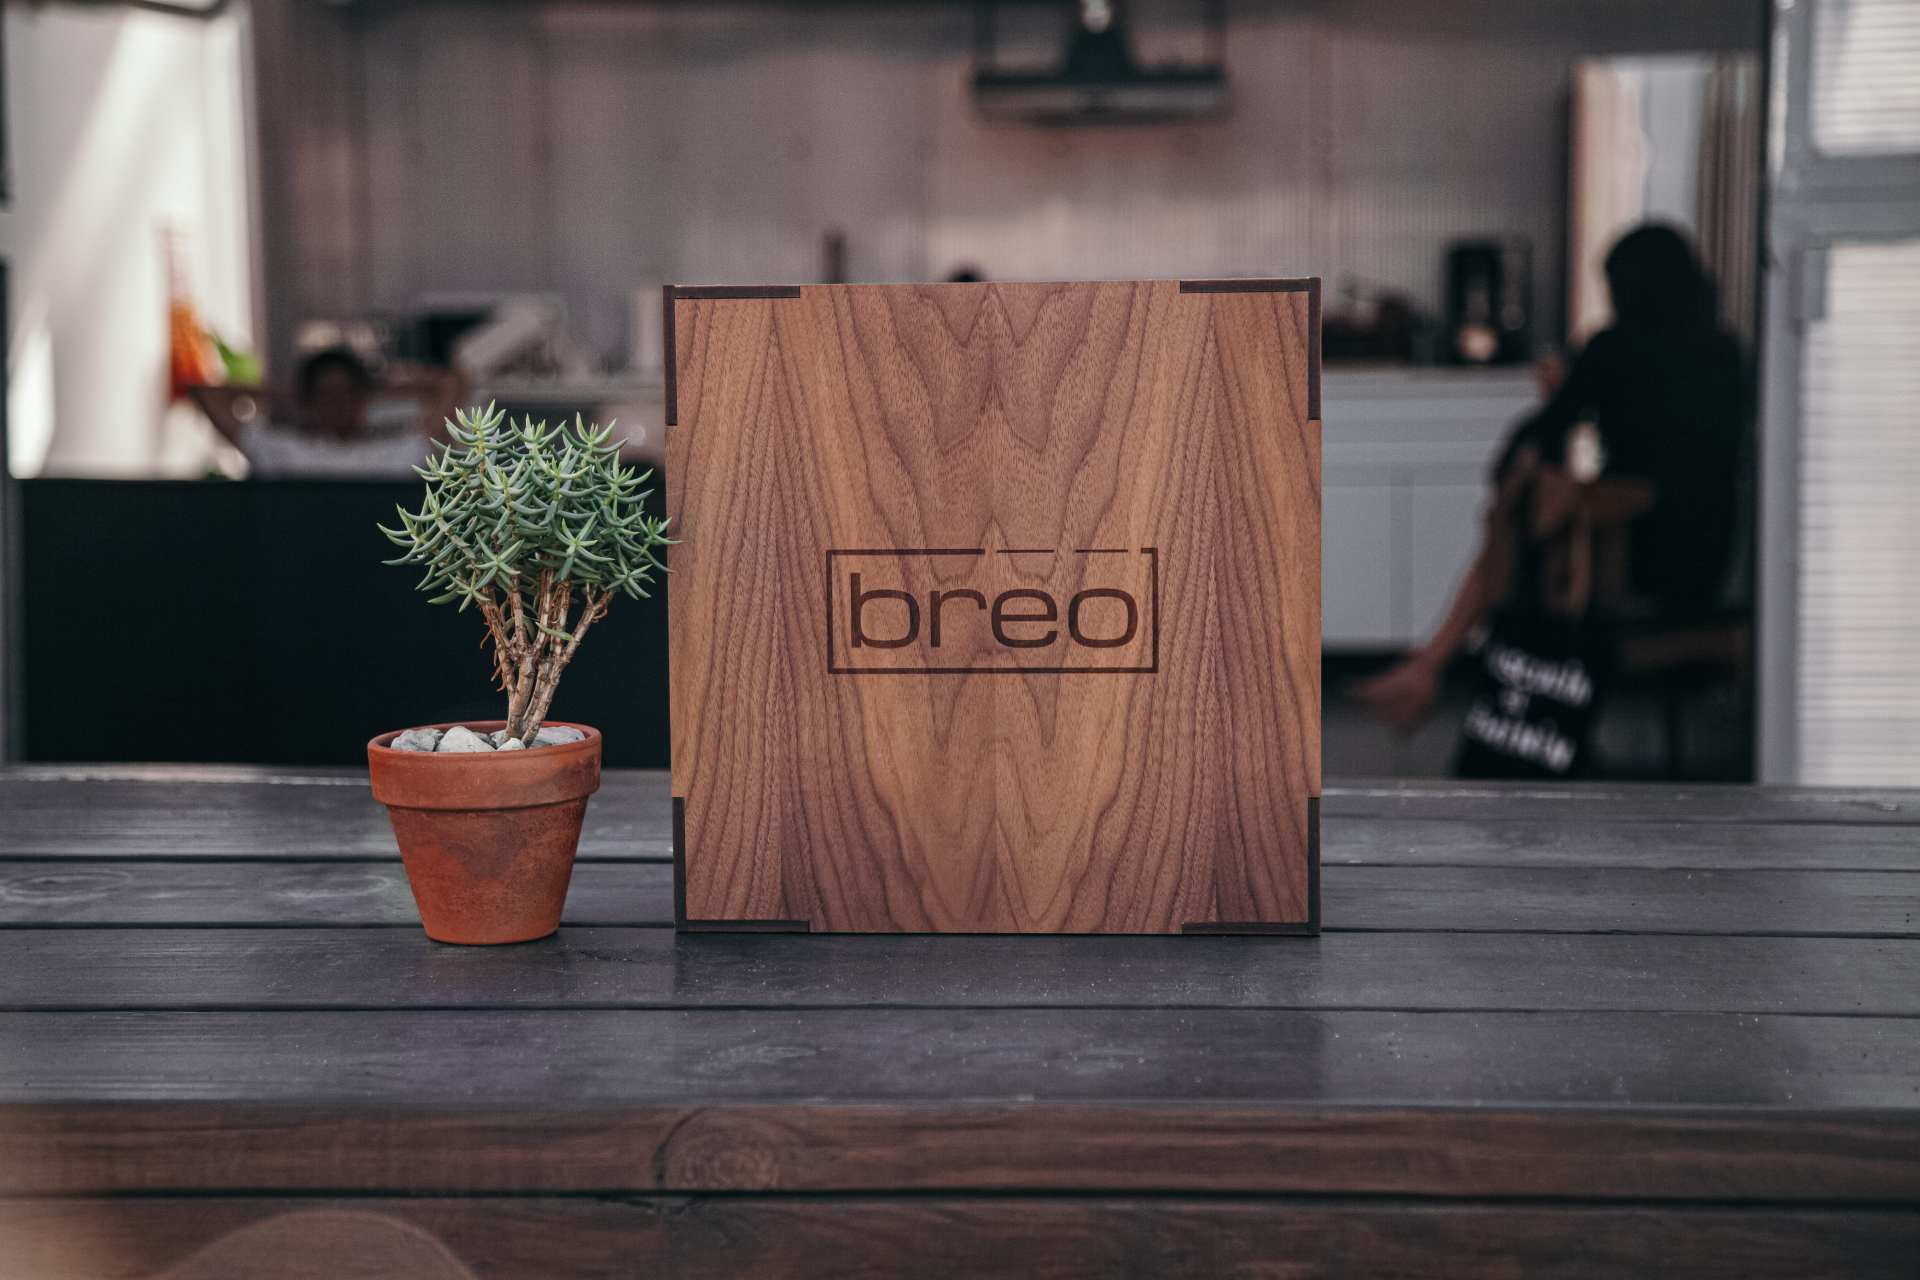 2020 Limited Edition Anniversary Breo Box Spoilers! Hello Subscription